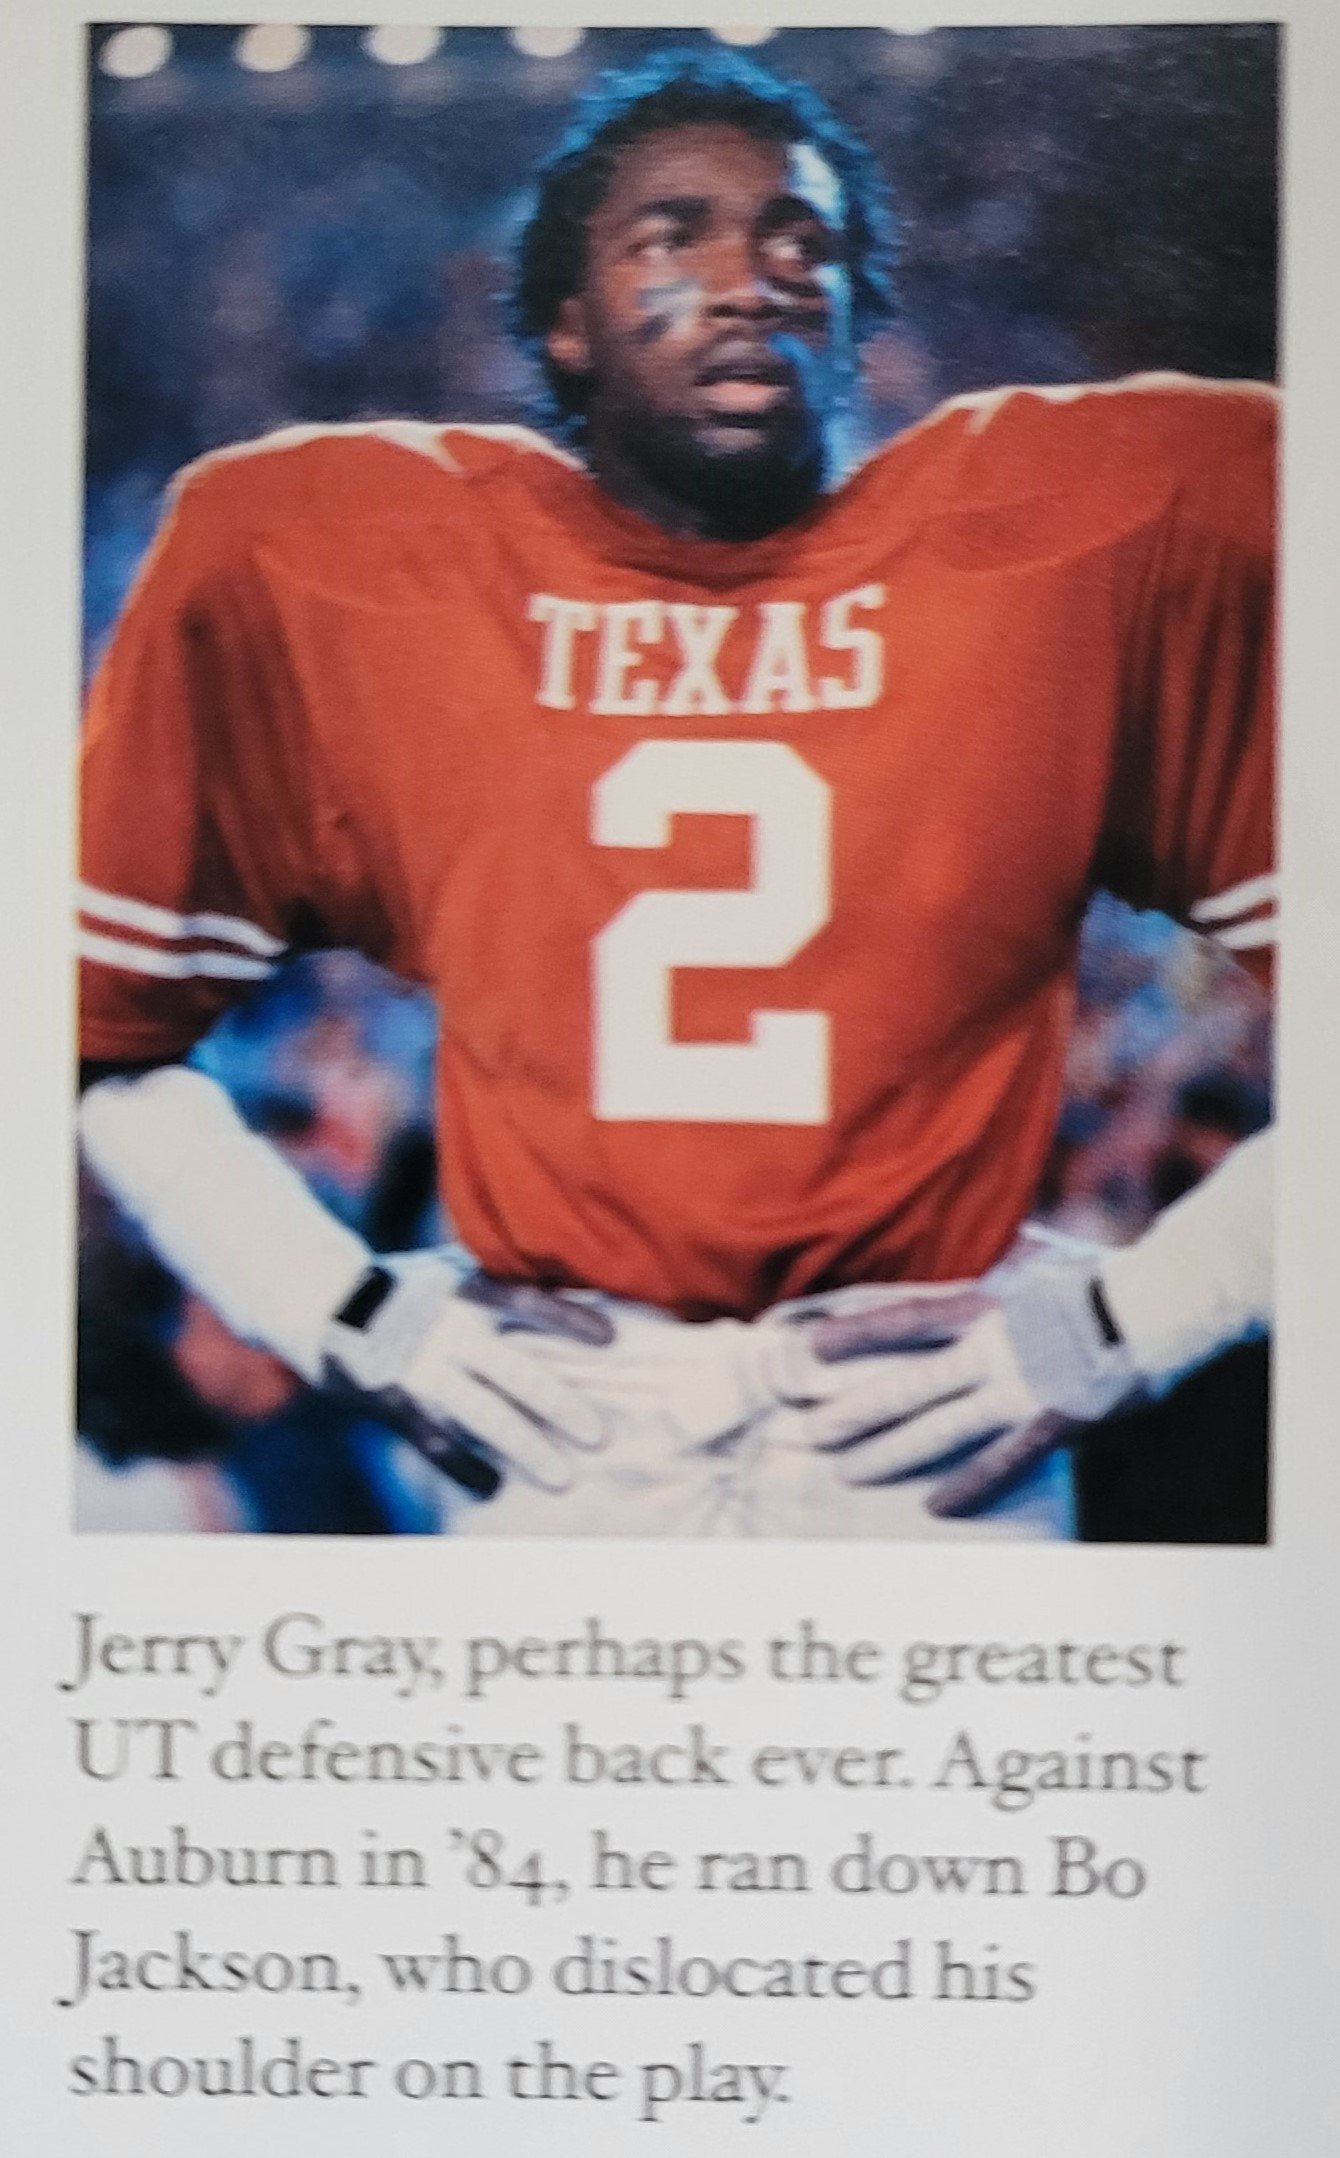 Jerry Gray